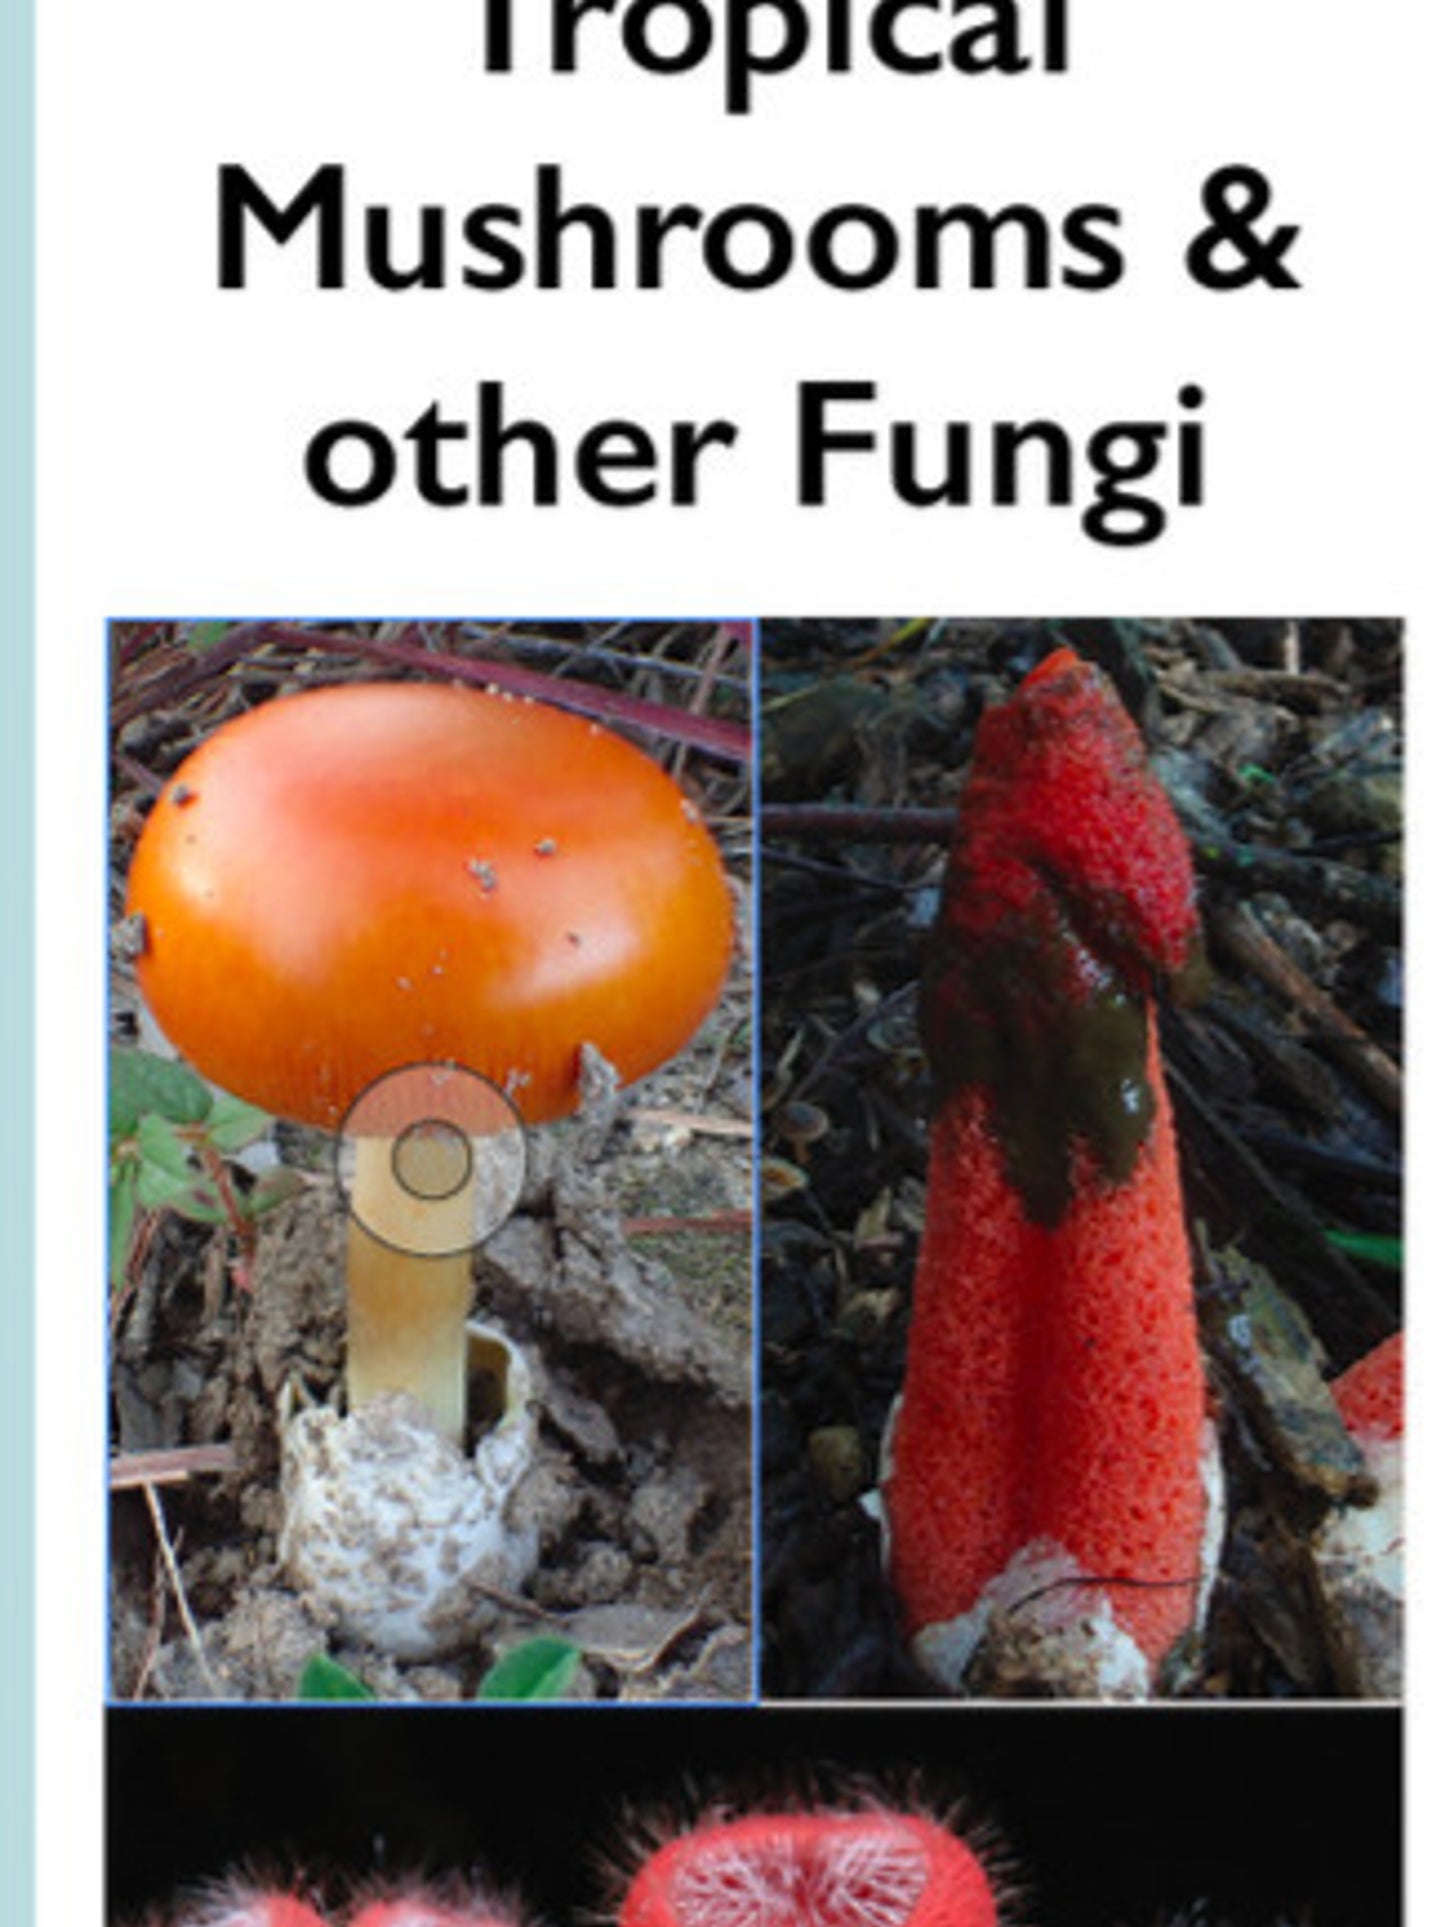 Australian Tropical Mushroom & other Fungi Field Guide